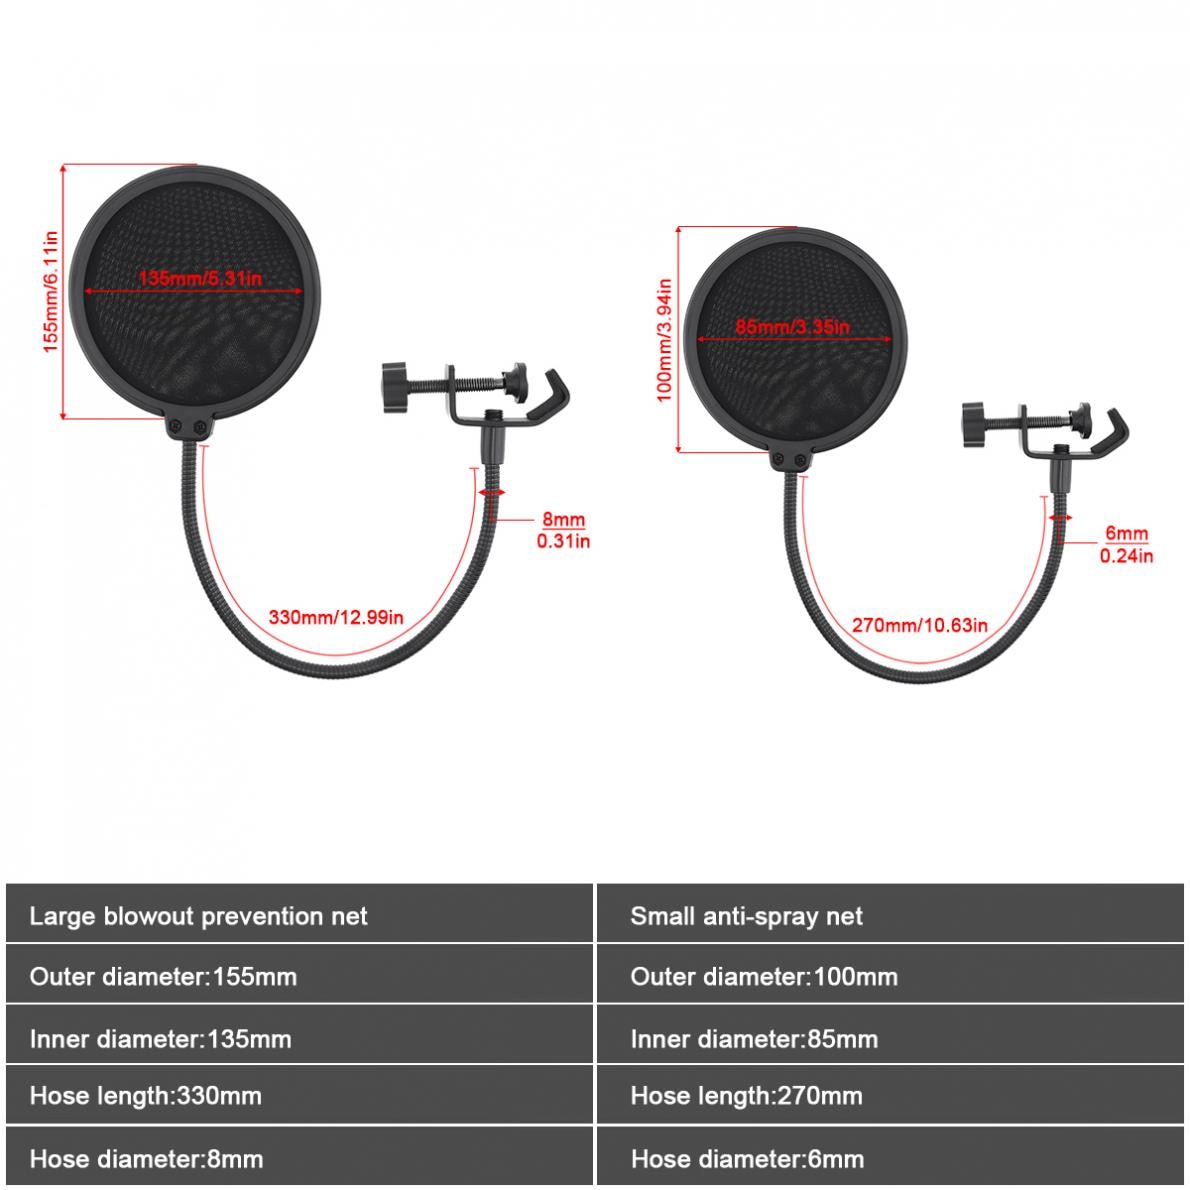 Dobbeltlags studiemikrofon fleksibel forrudemaske mic popfilterskjold 100/155mm til taleoptagelsestilbehør